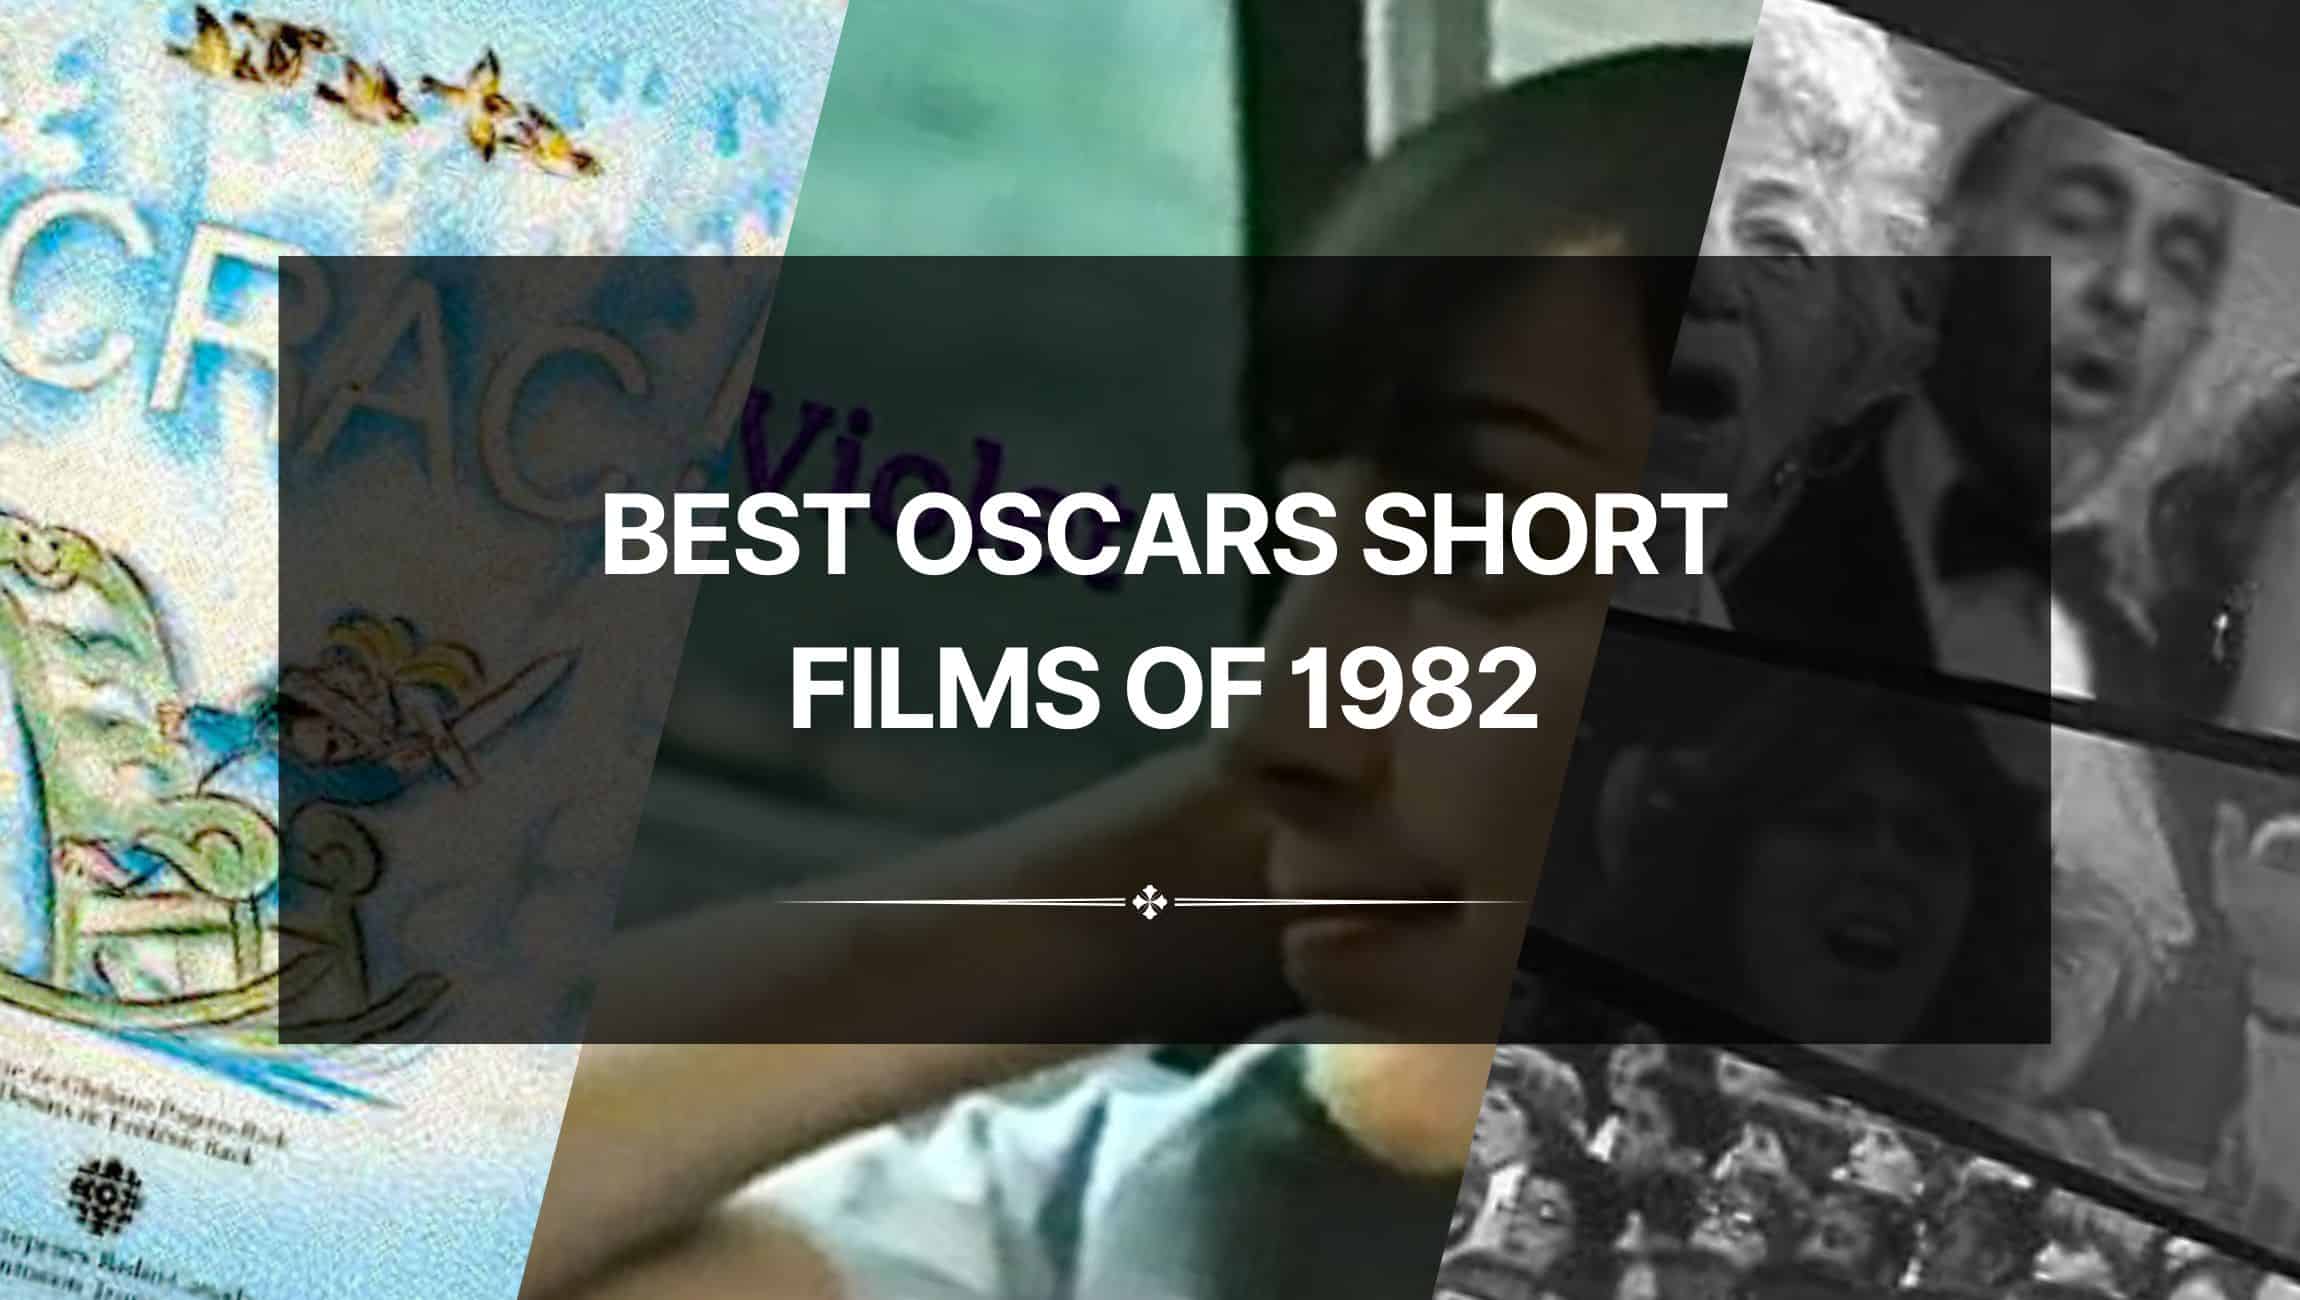 Best Oscars Short Films of 1982